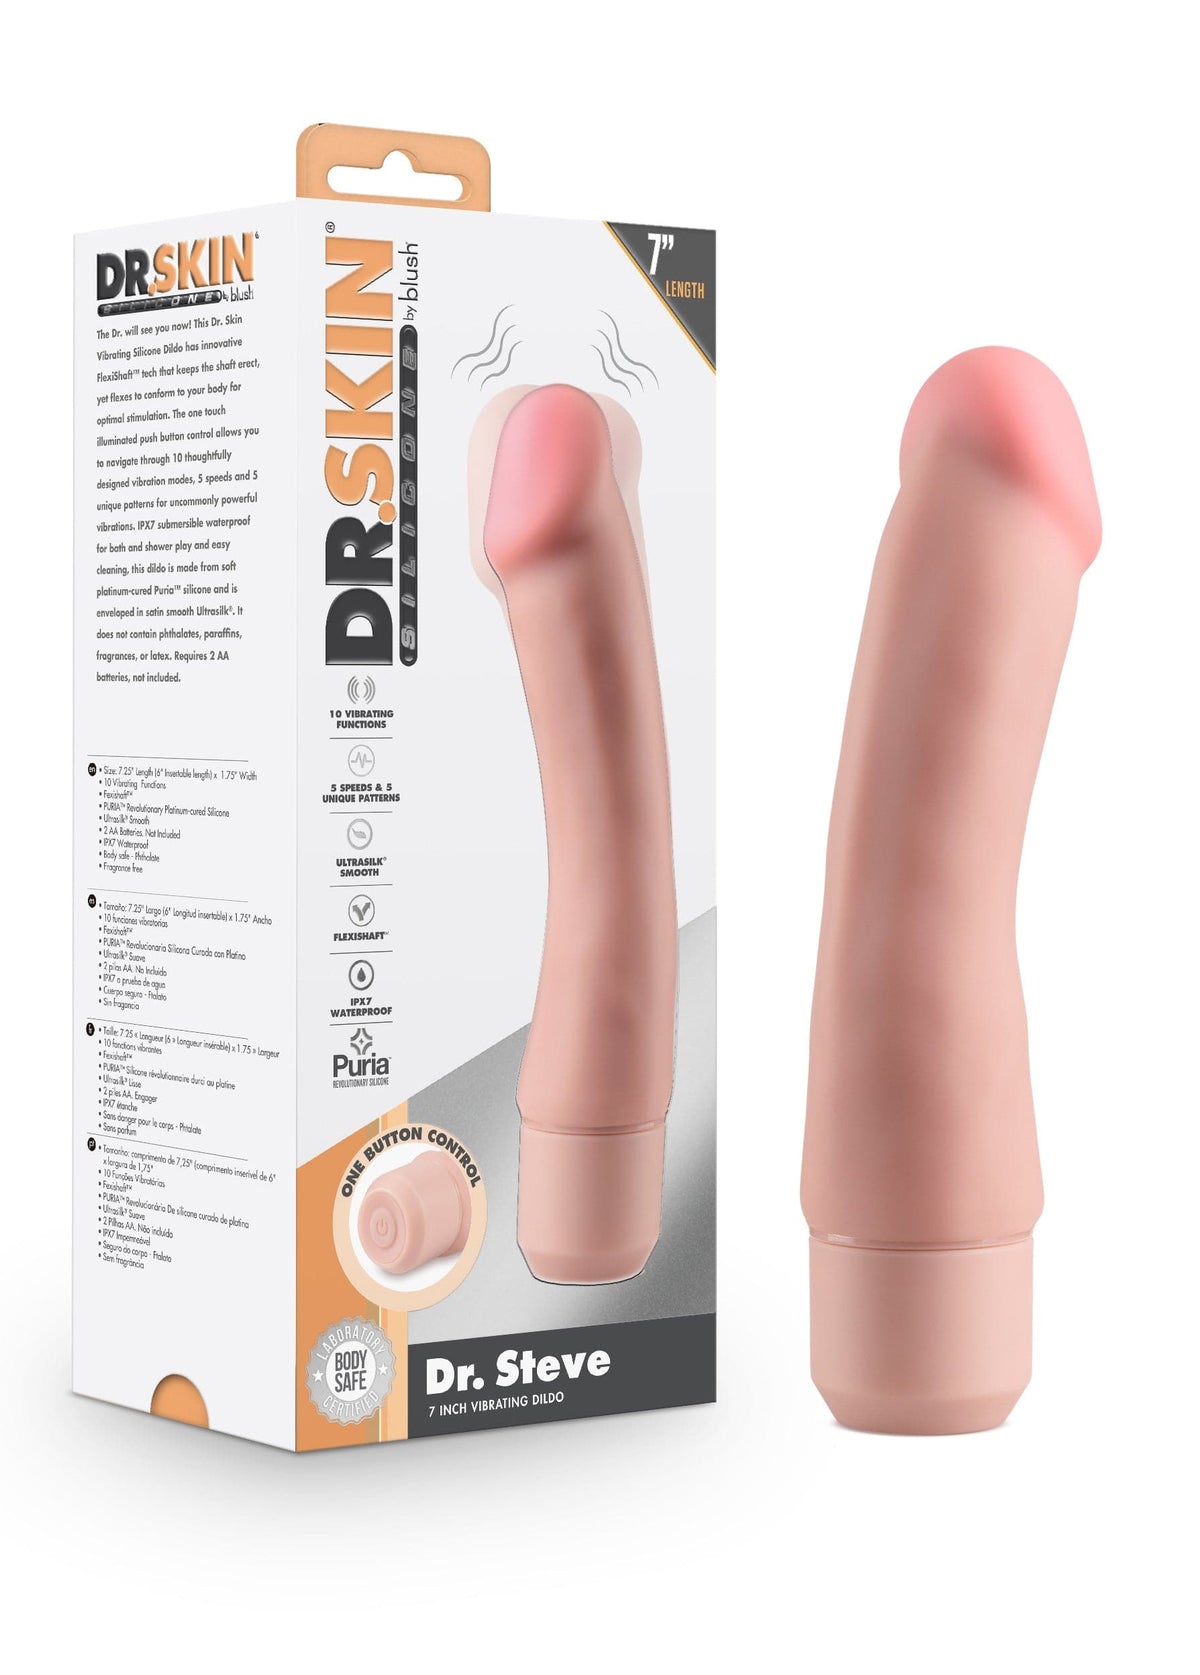 dr skin silicone dr steve 7 inch vibrating dildo beige